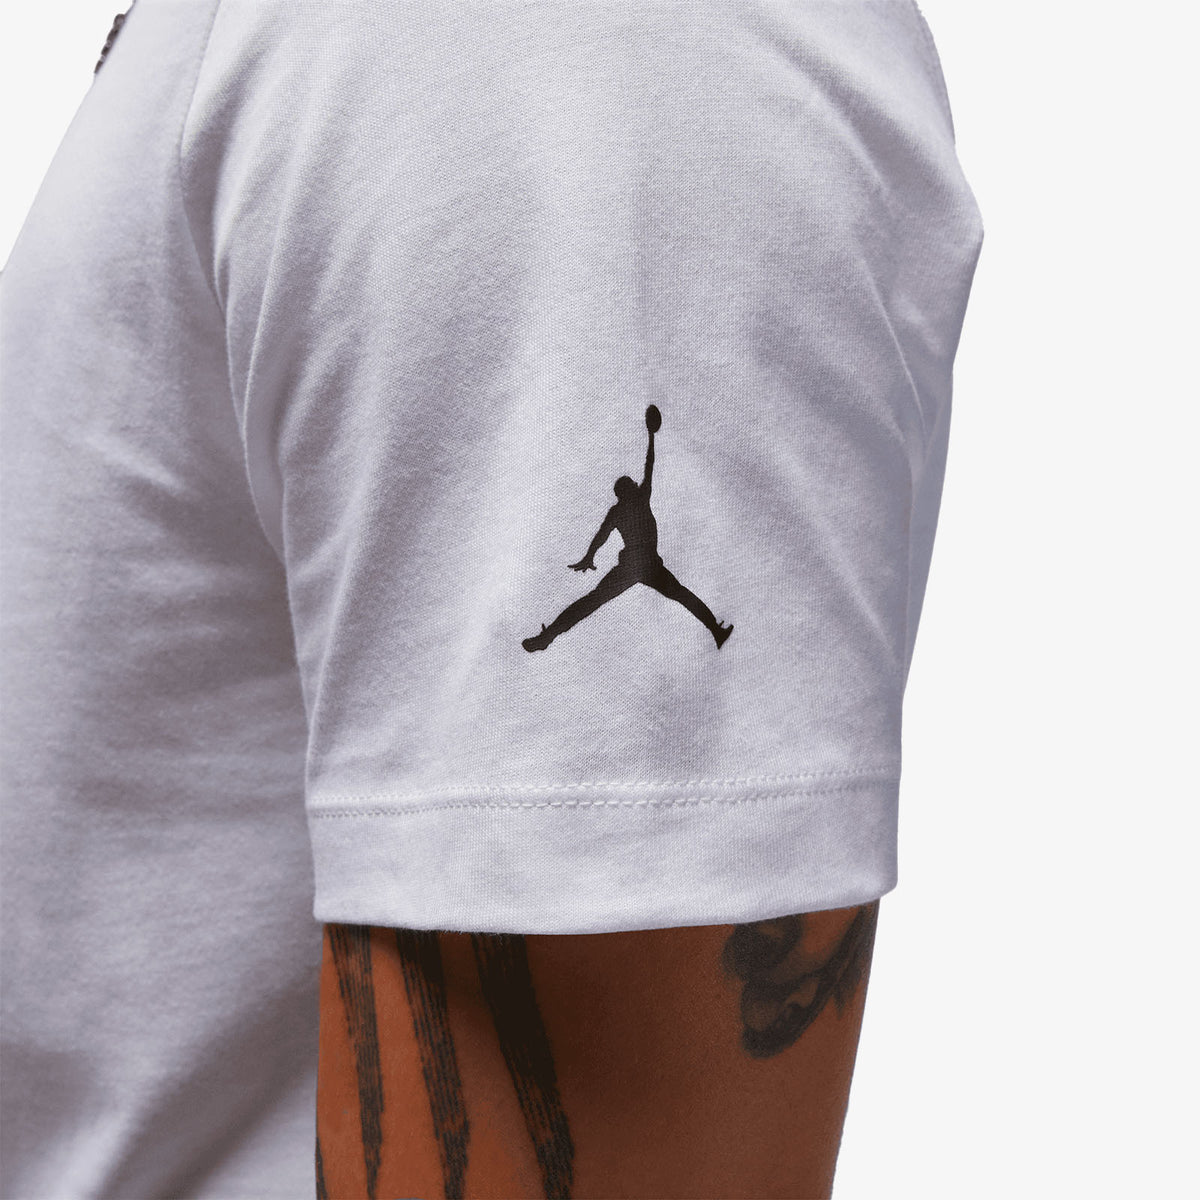 Jordan Dunk Graphic T-Shirt - White